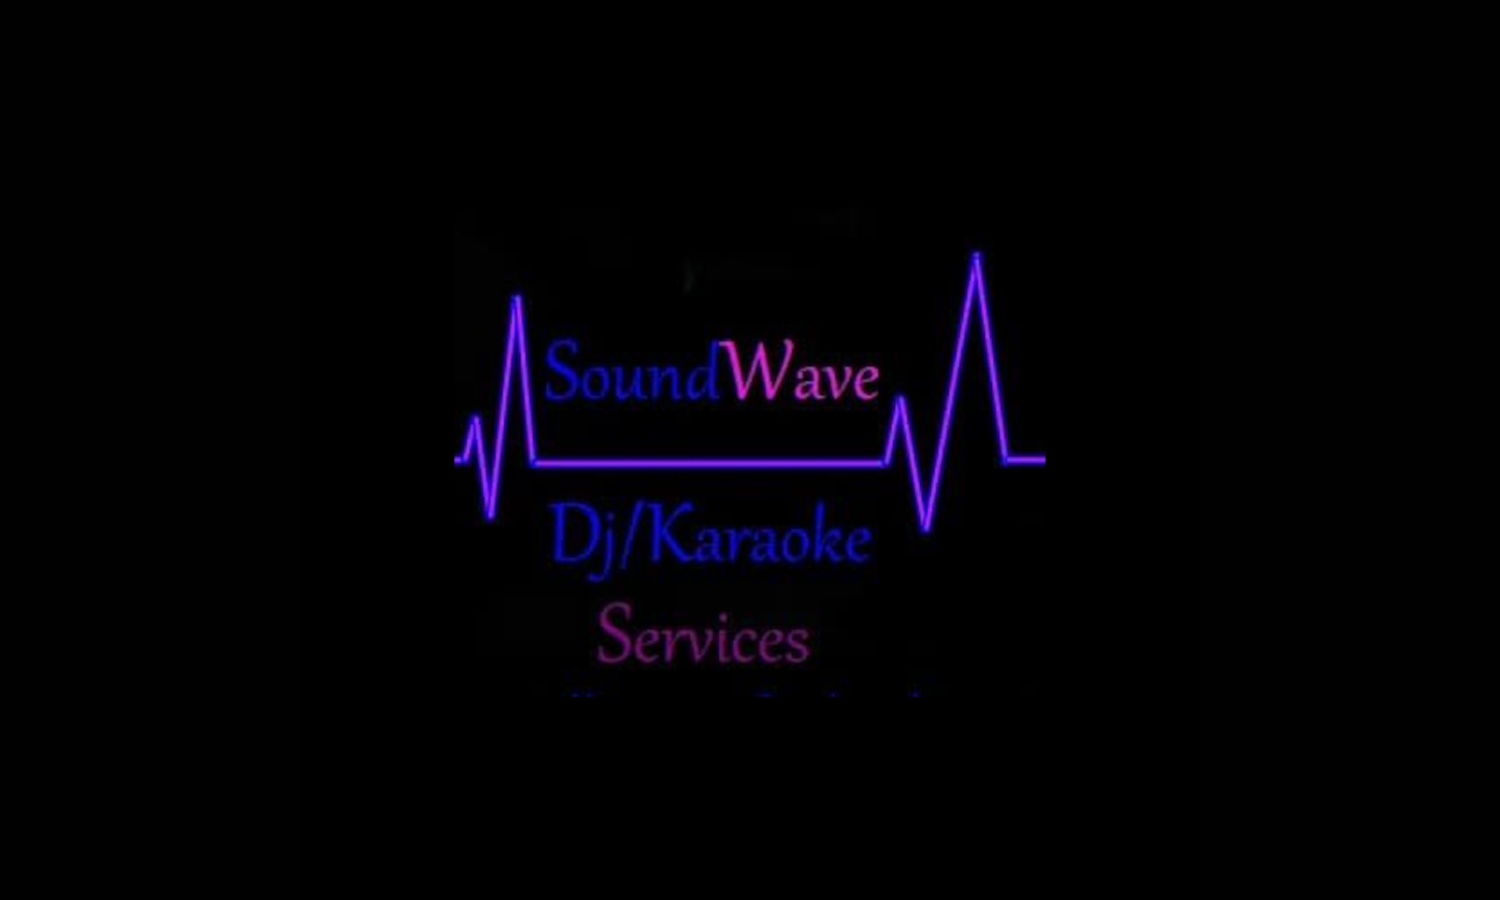 SoundWave DJ/Karaoke Services LLC